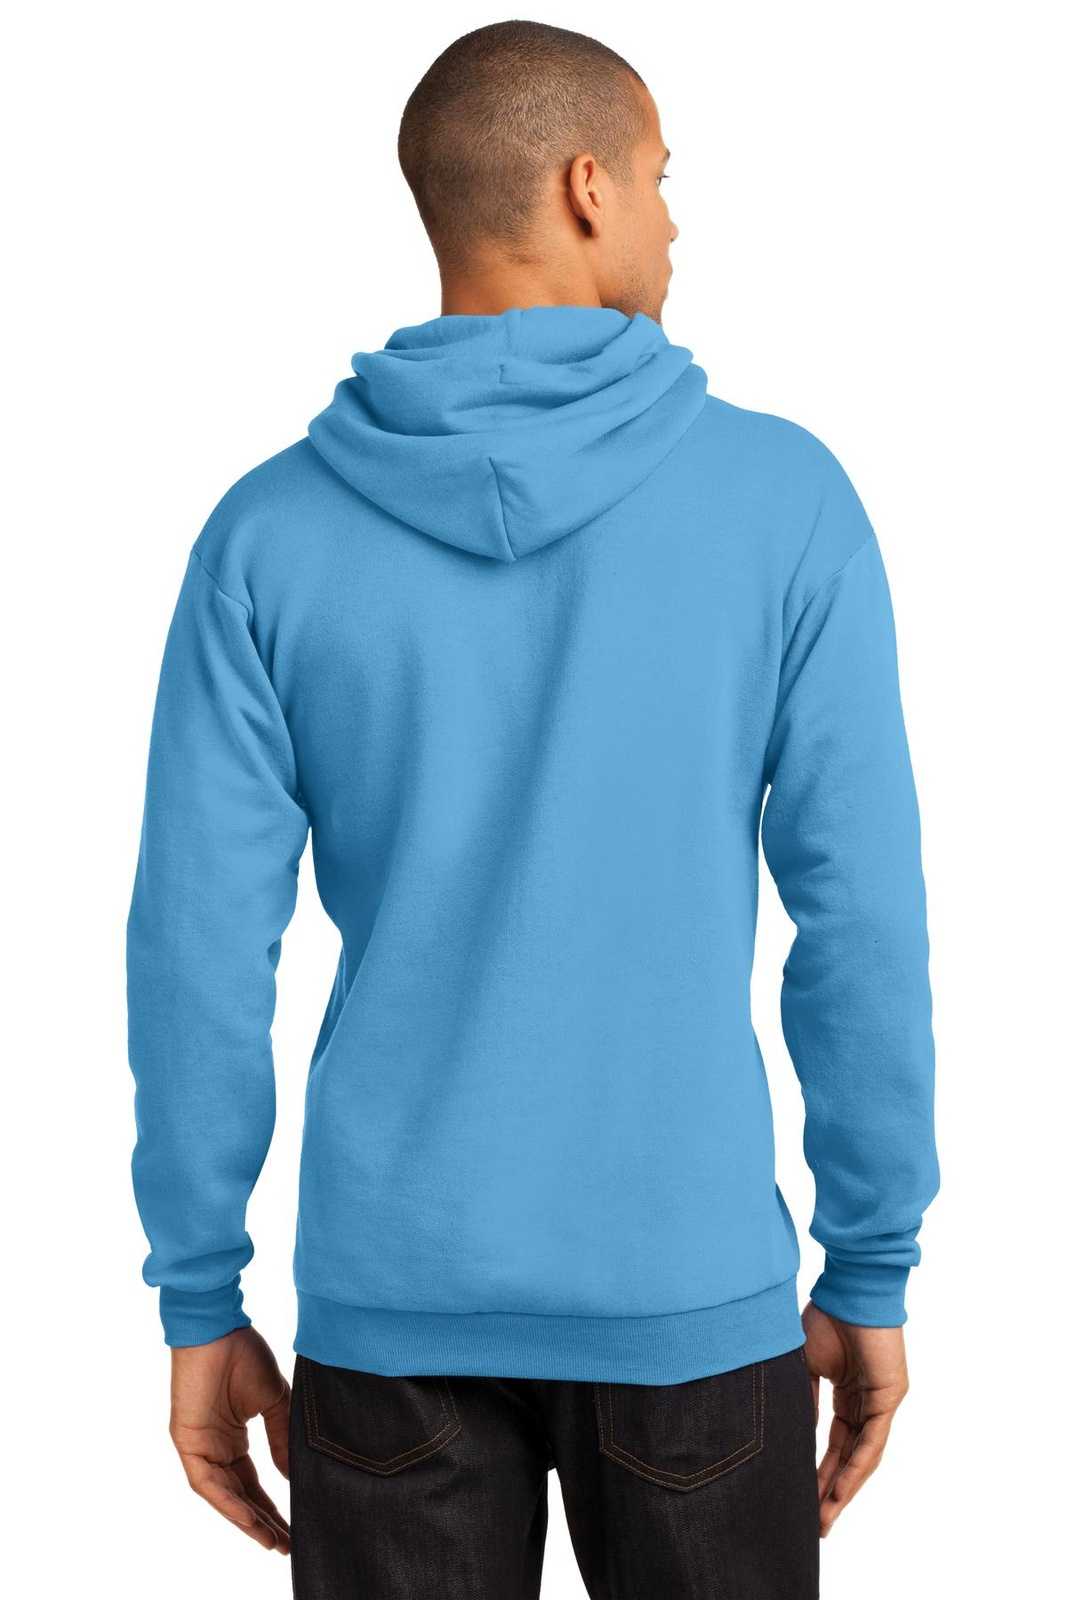 Port & Company PC78H Core Fleece Pullover Hooded Sweatshirt - Aquatic Blue - HIT a Double - 1